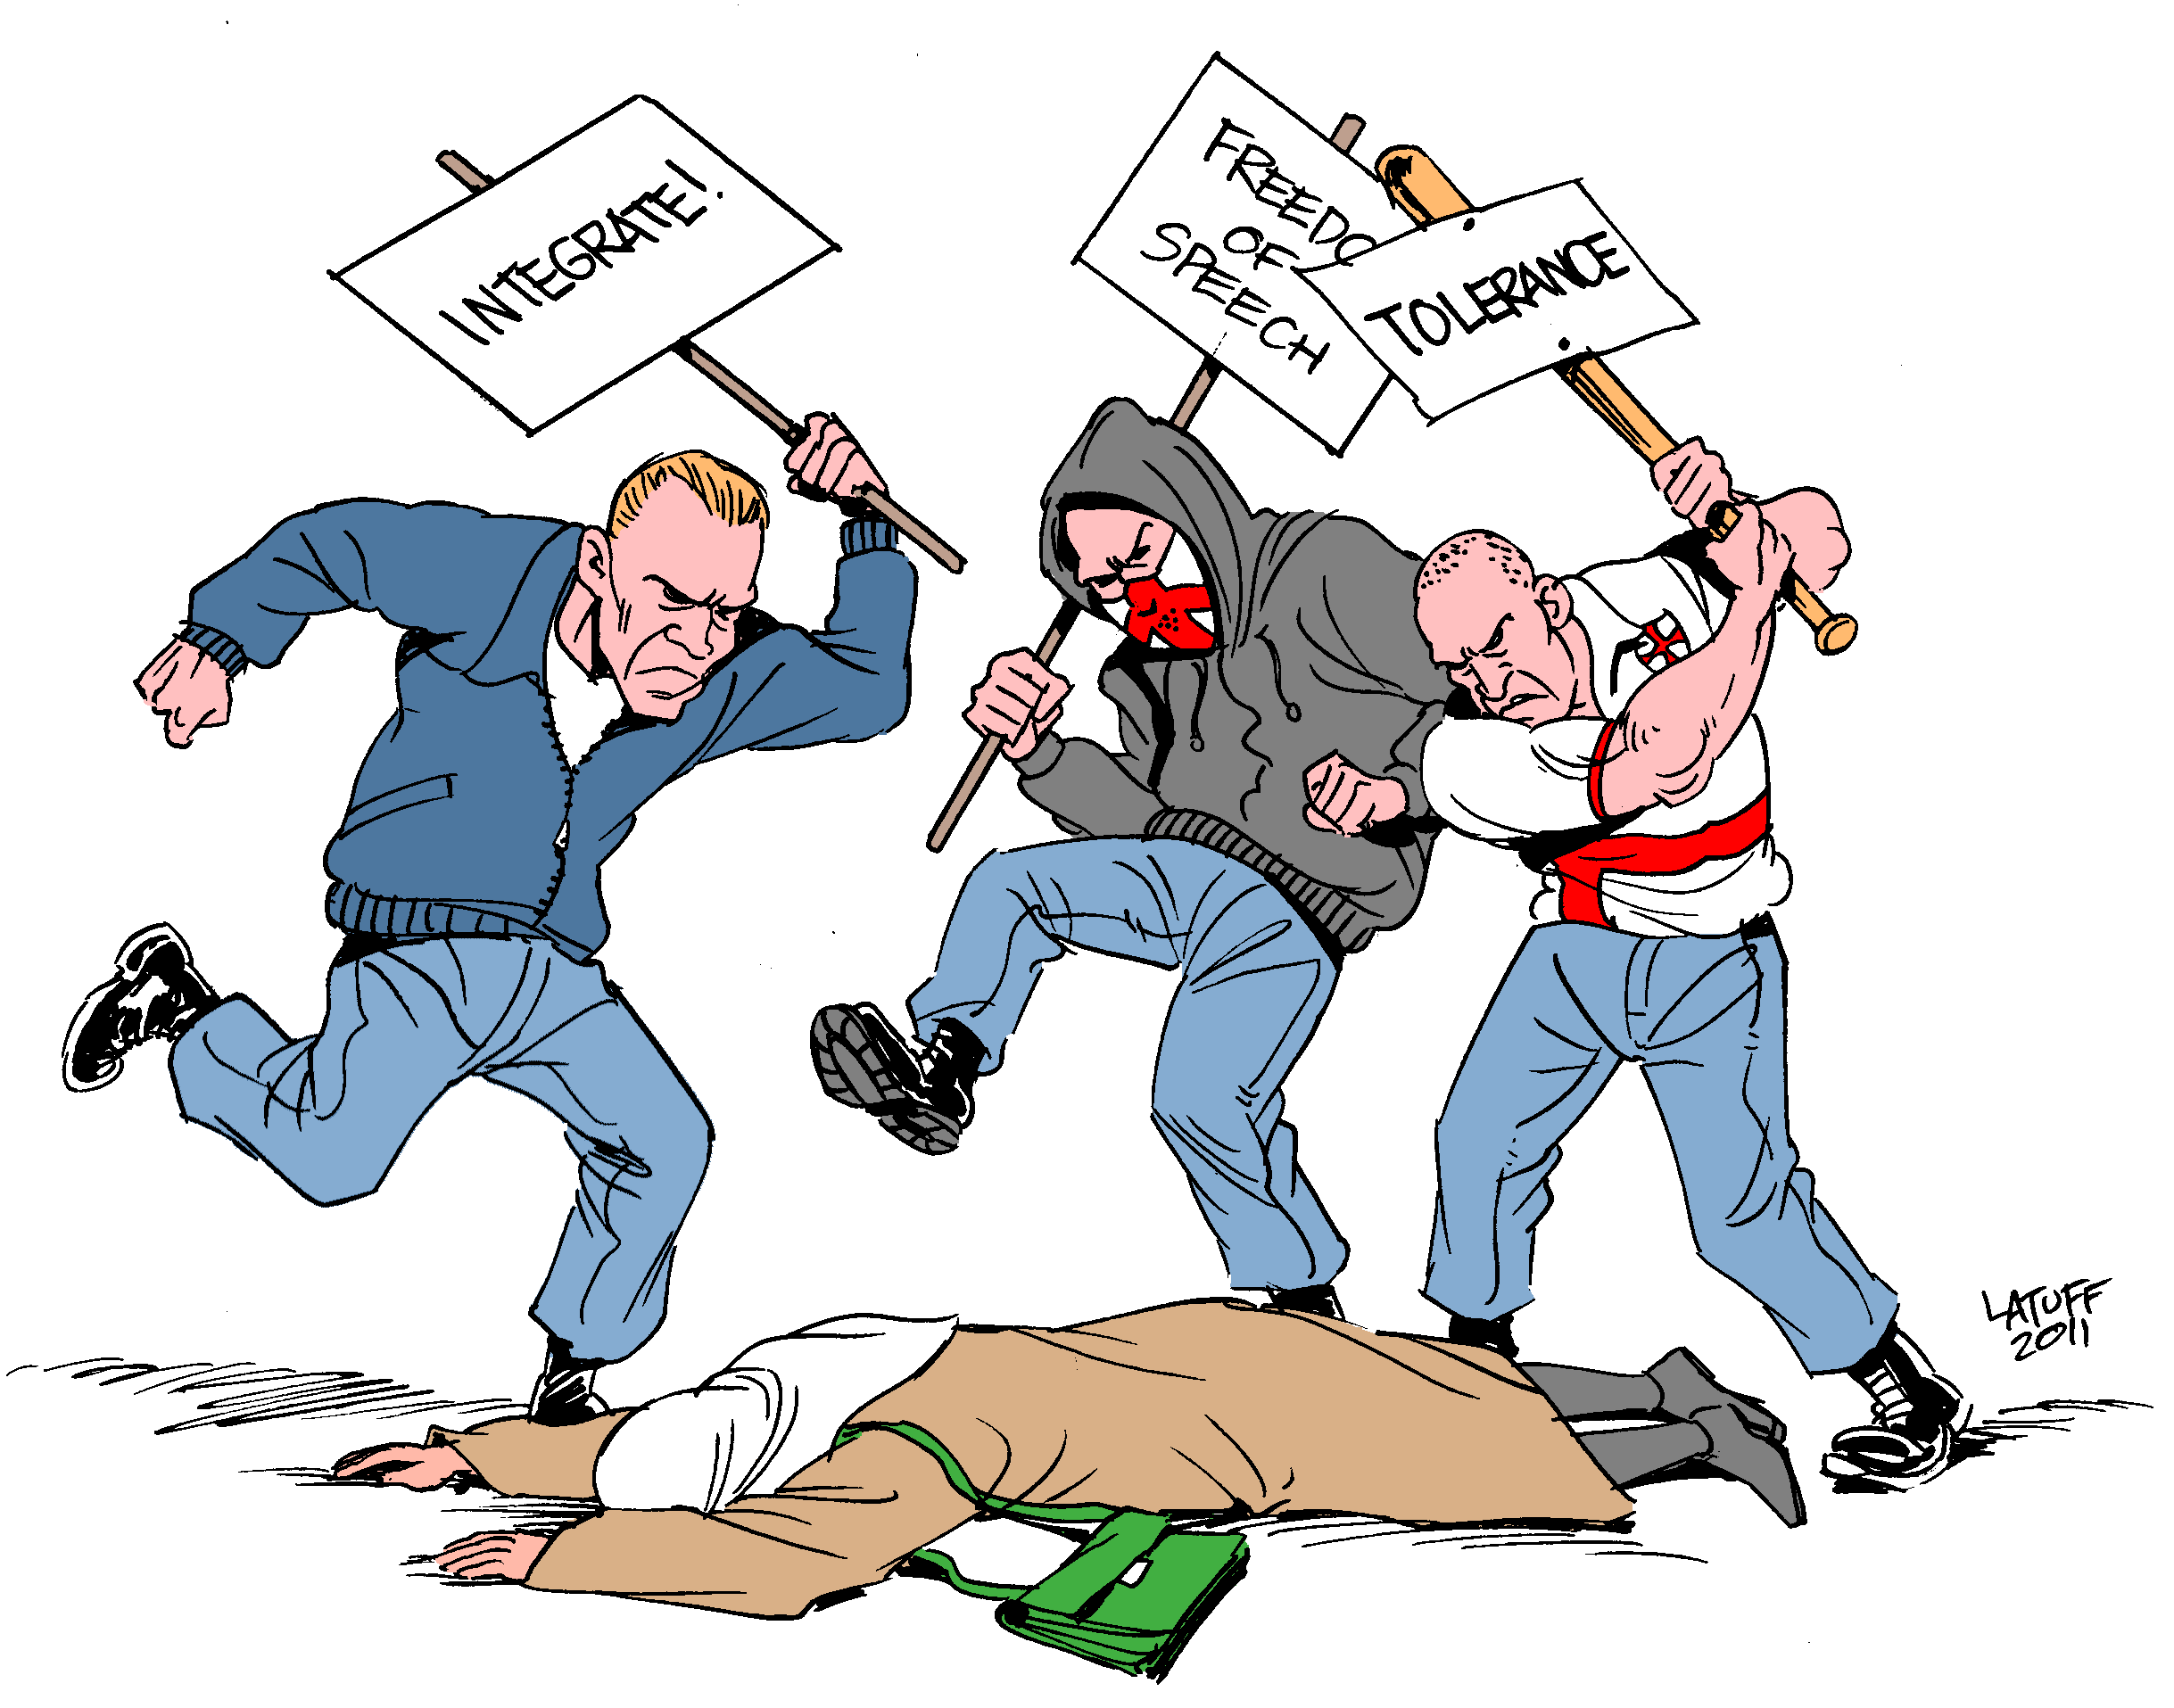 У терроризма нет национальности и религии. Религиозный конфликт карикатуры. Карикатура против Ислама. Дискриминация карикатура. Преступность карикатура.